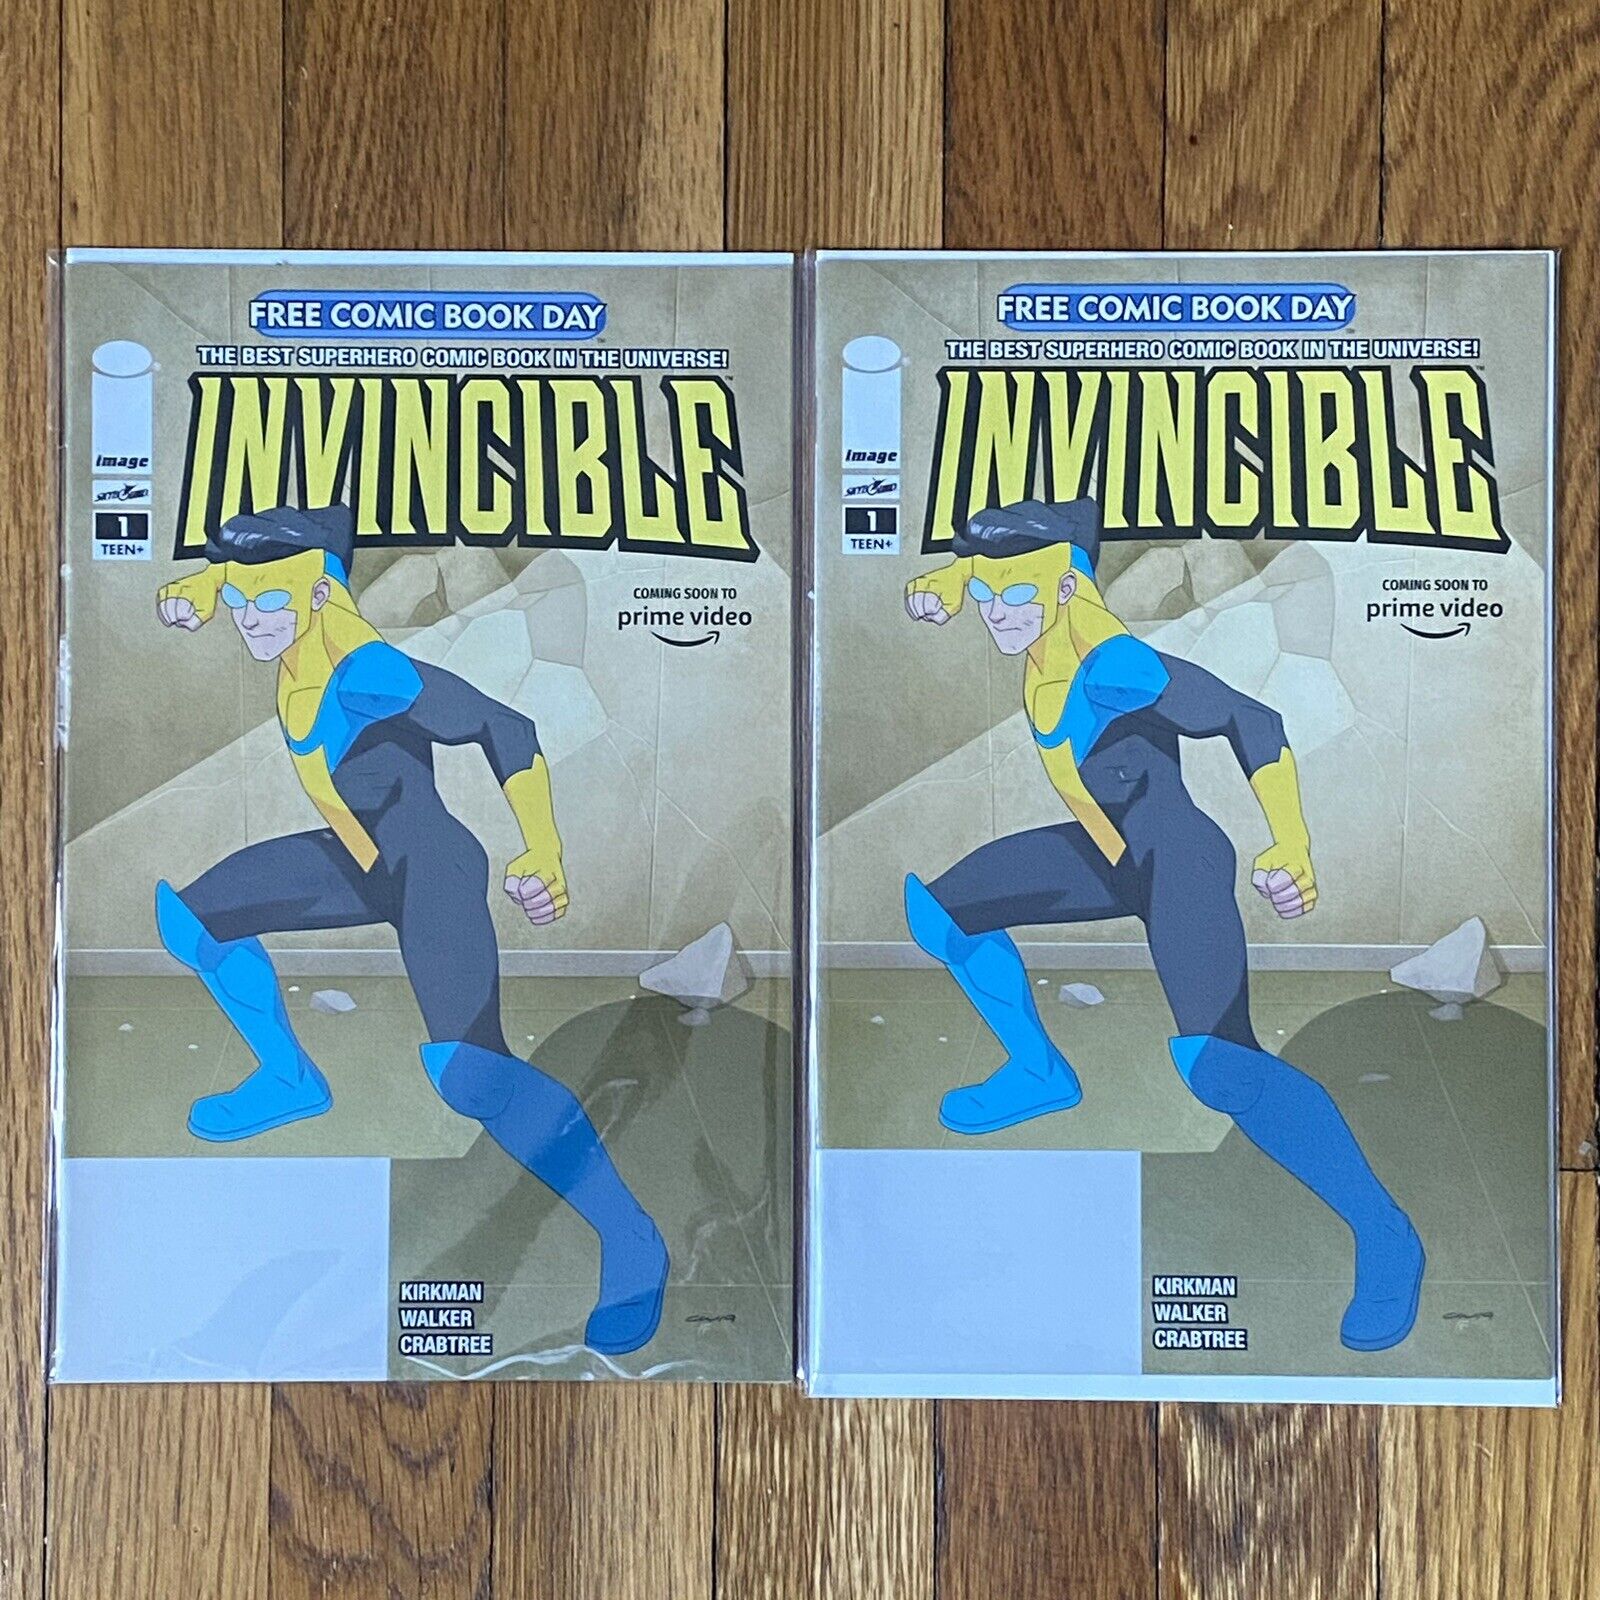 2 Copies of Invincible #1 (Image Comics 2020) Free Comic Book Day Amazon